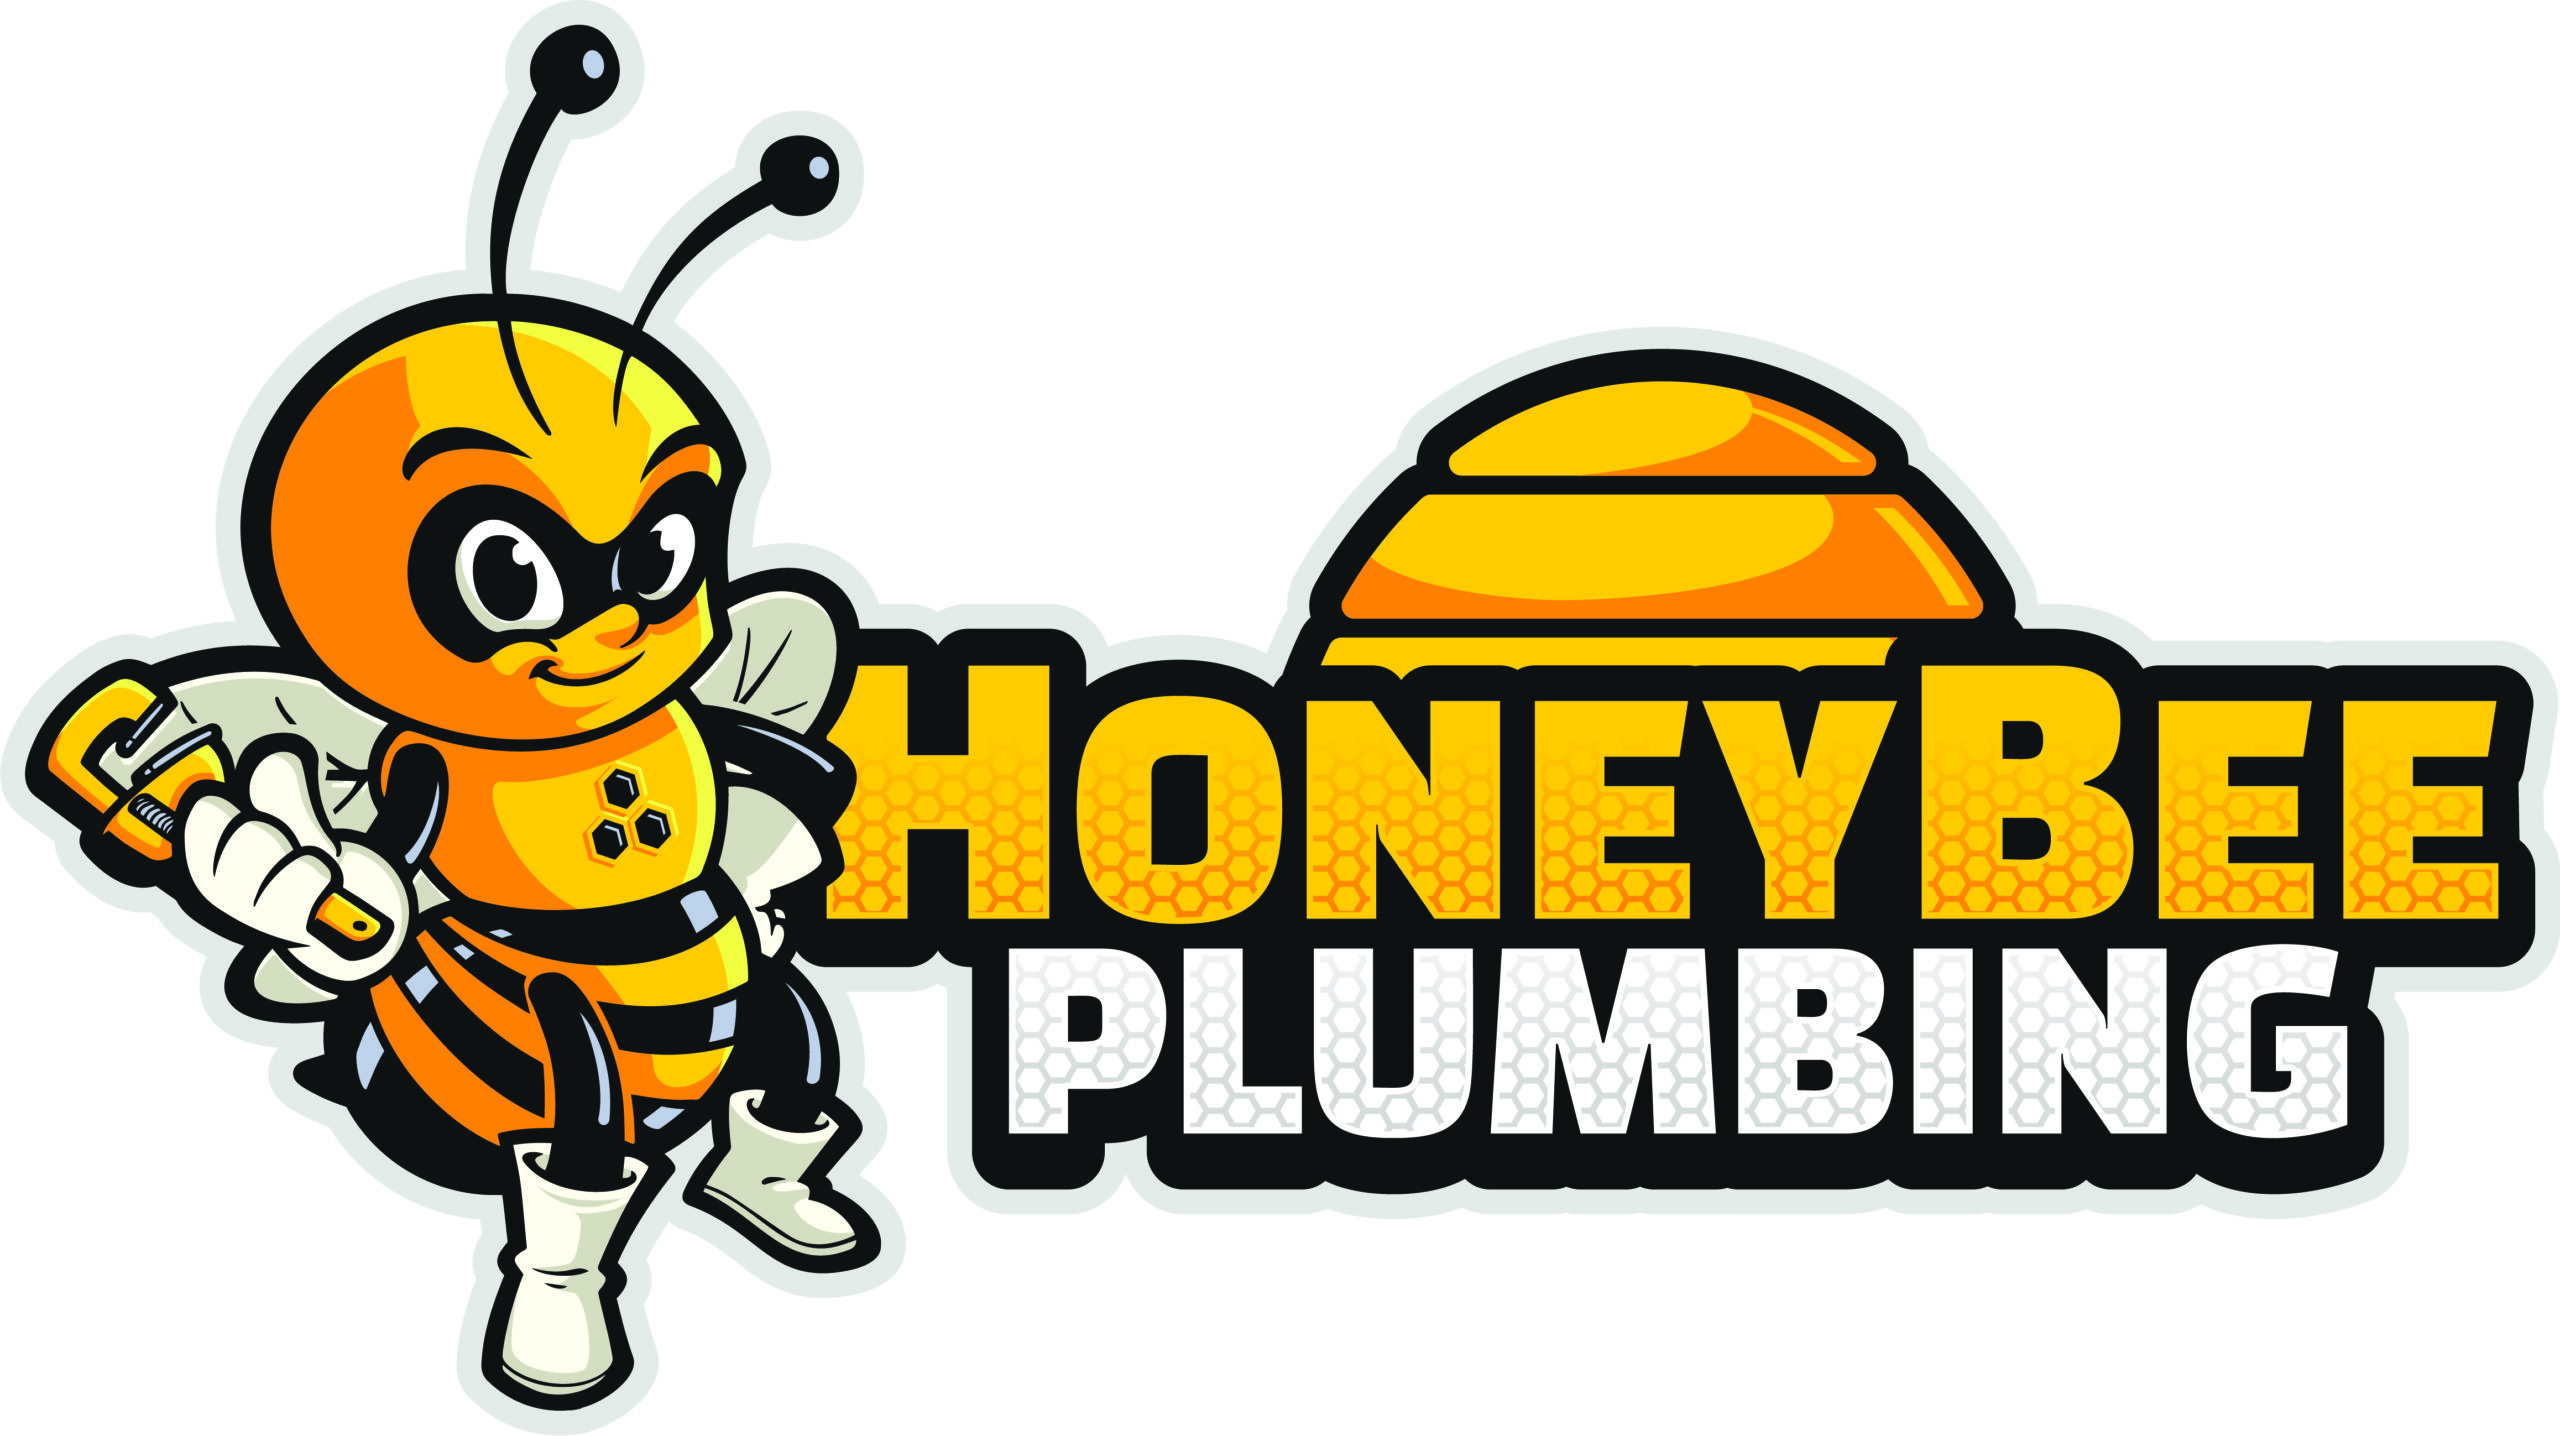 Honey Bee Plumbing logo with honey bee mascot